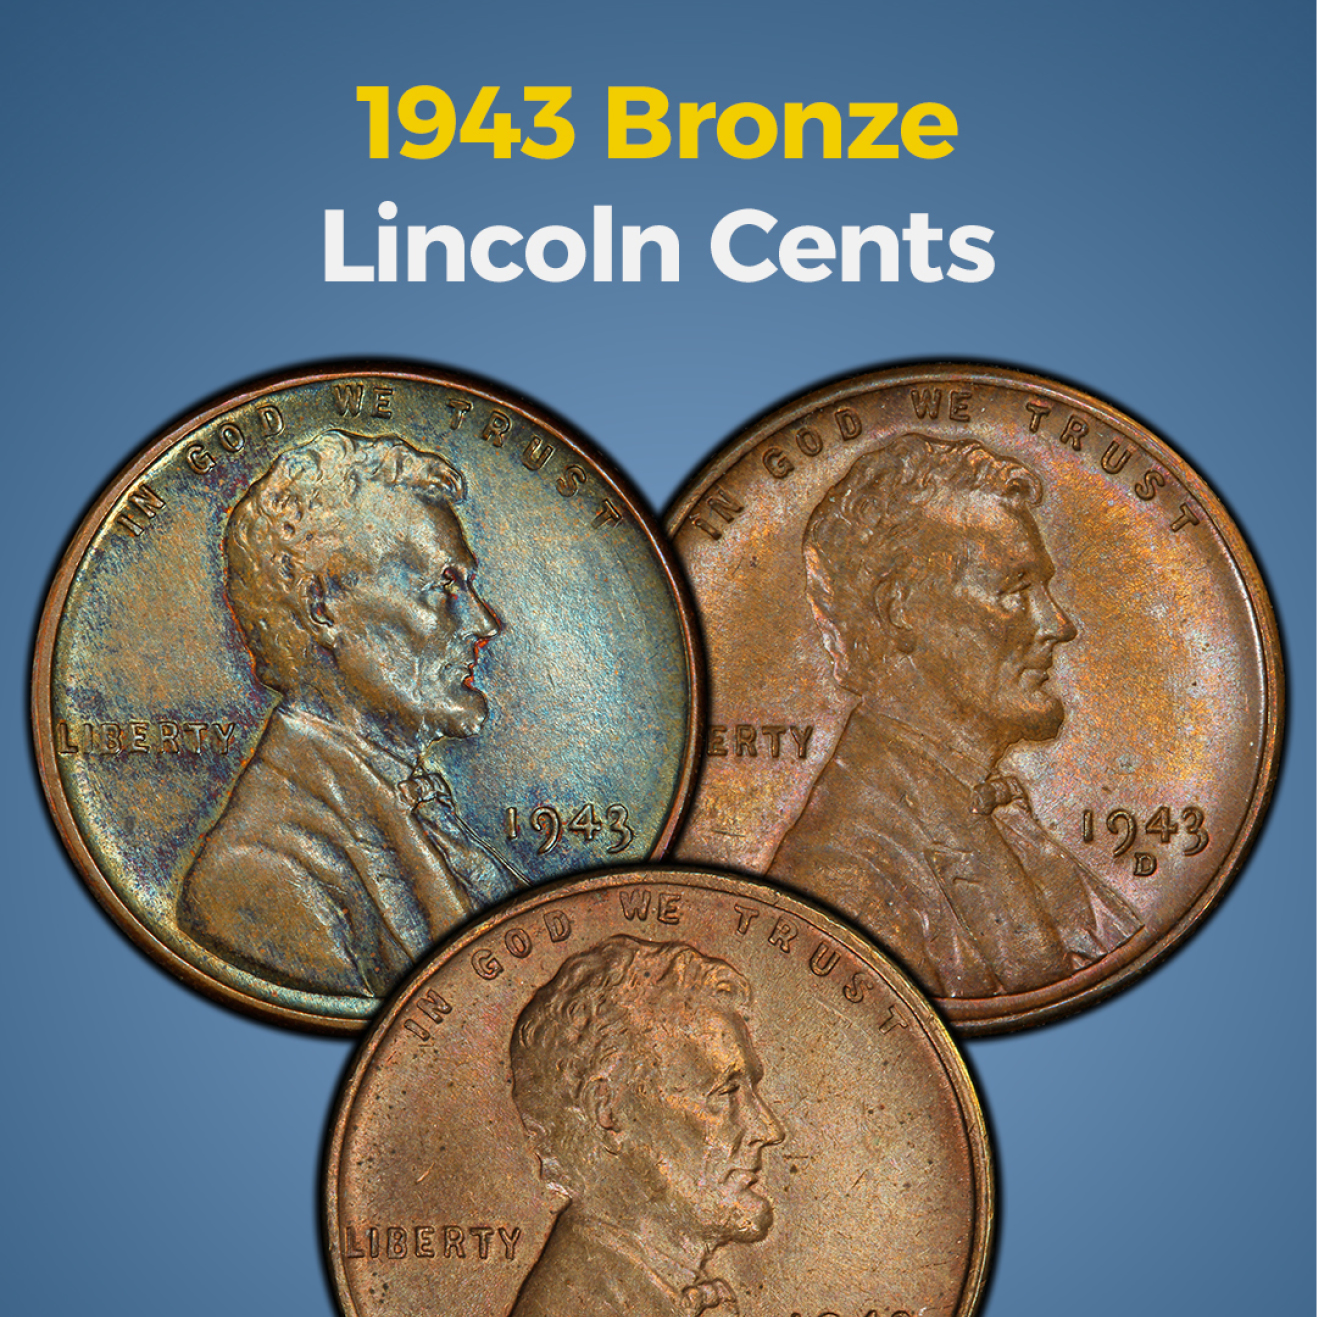 Latest Image: 1943 Bronze Cents Variety Attribution